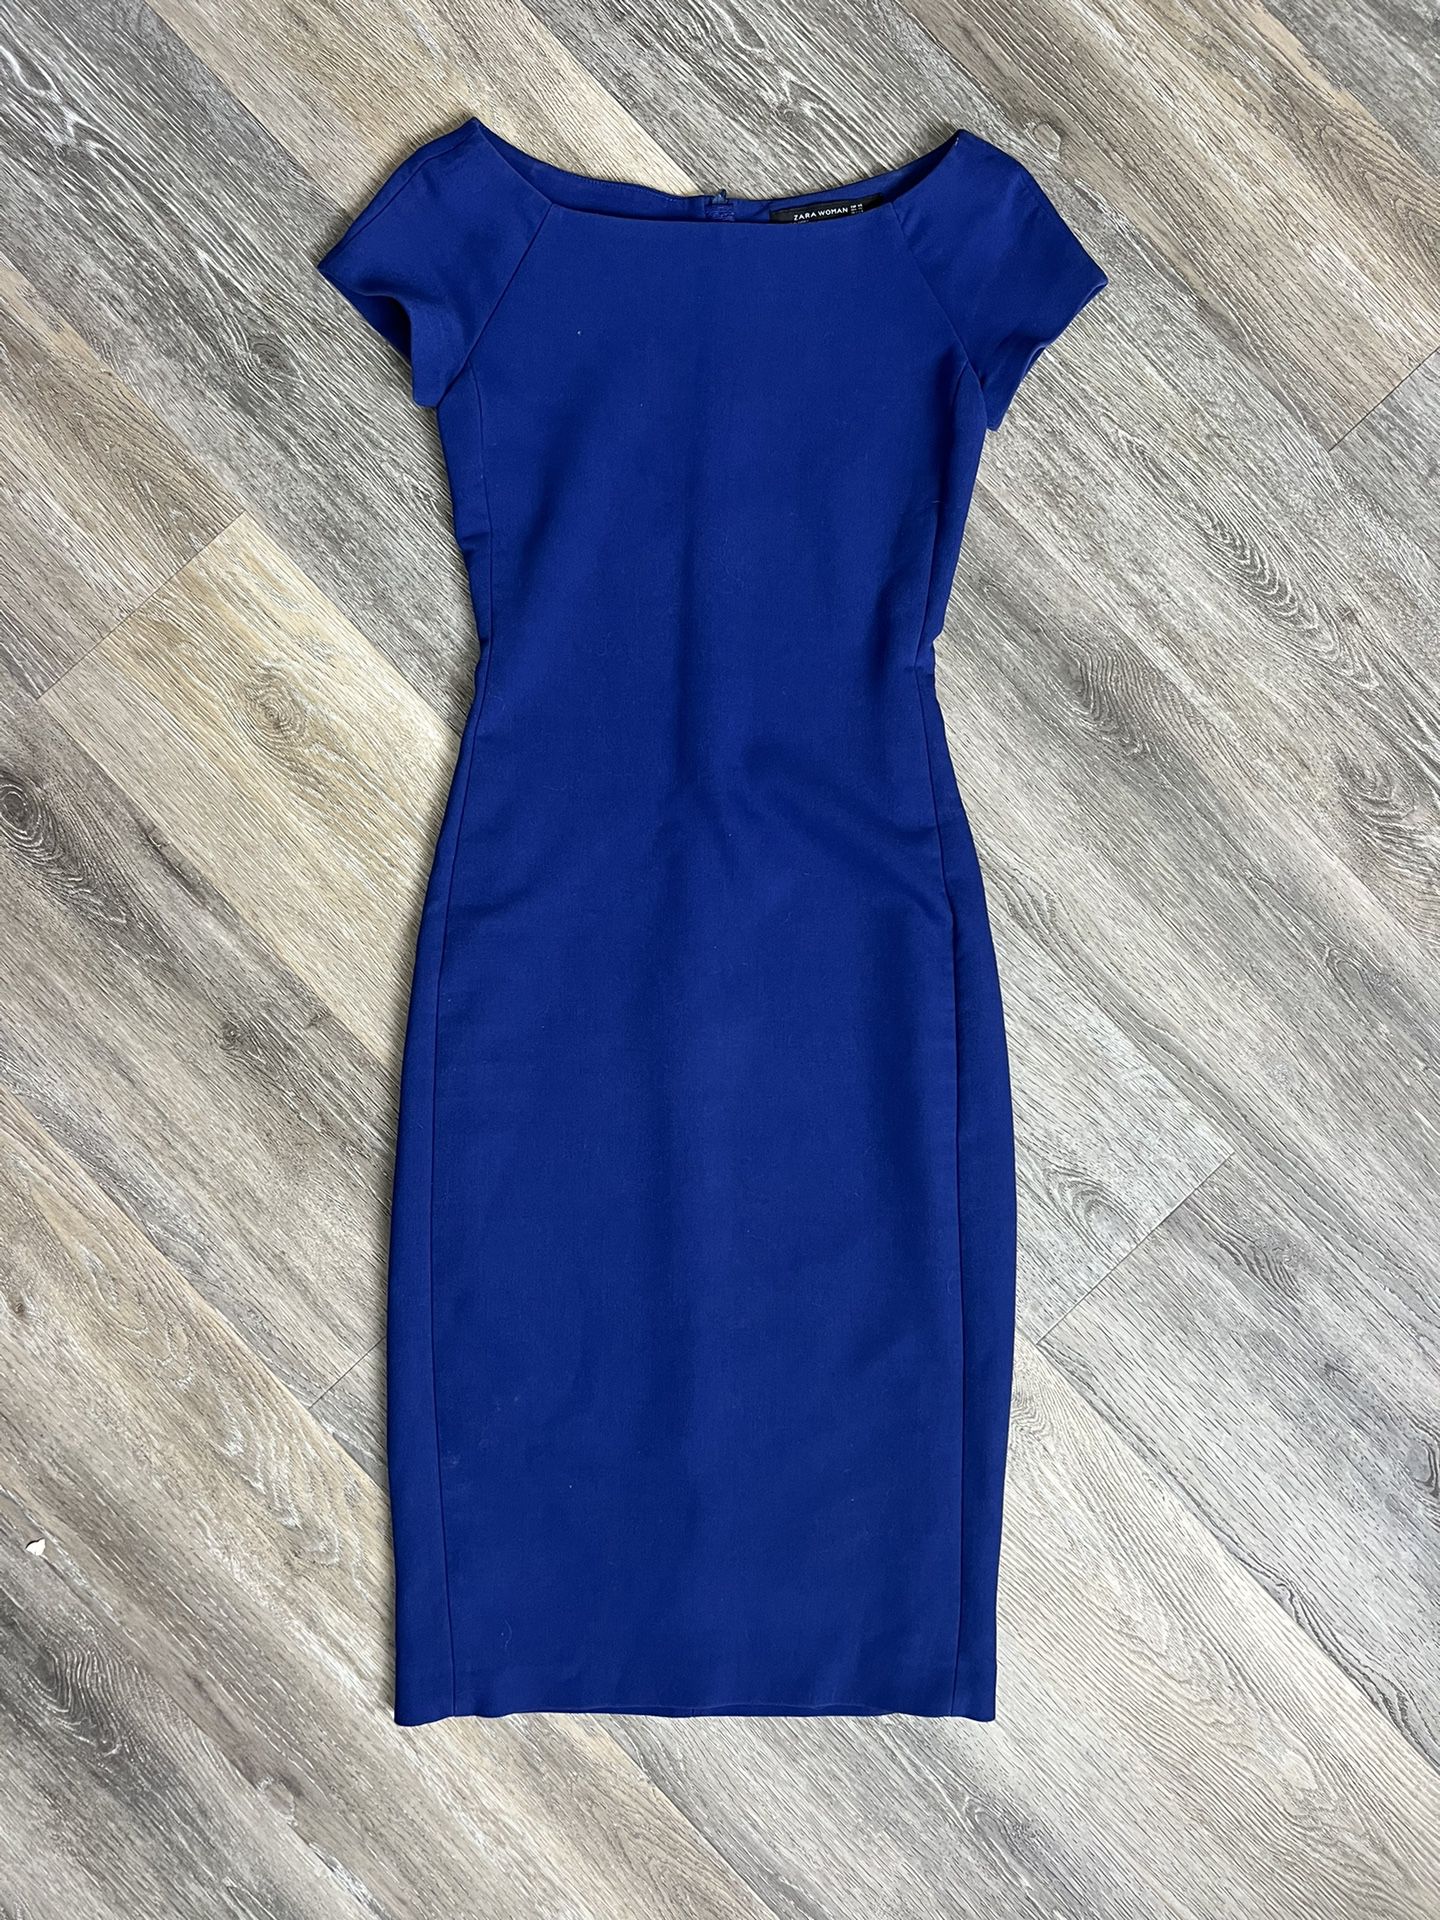 Elegant Blue Dress 